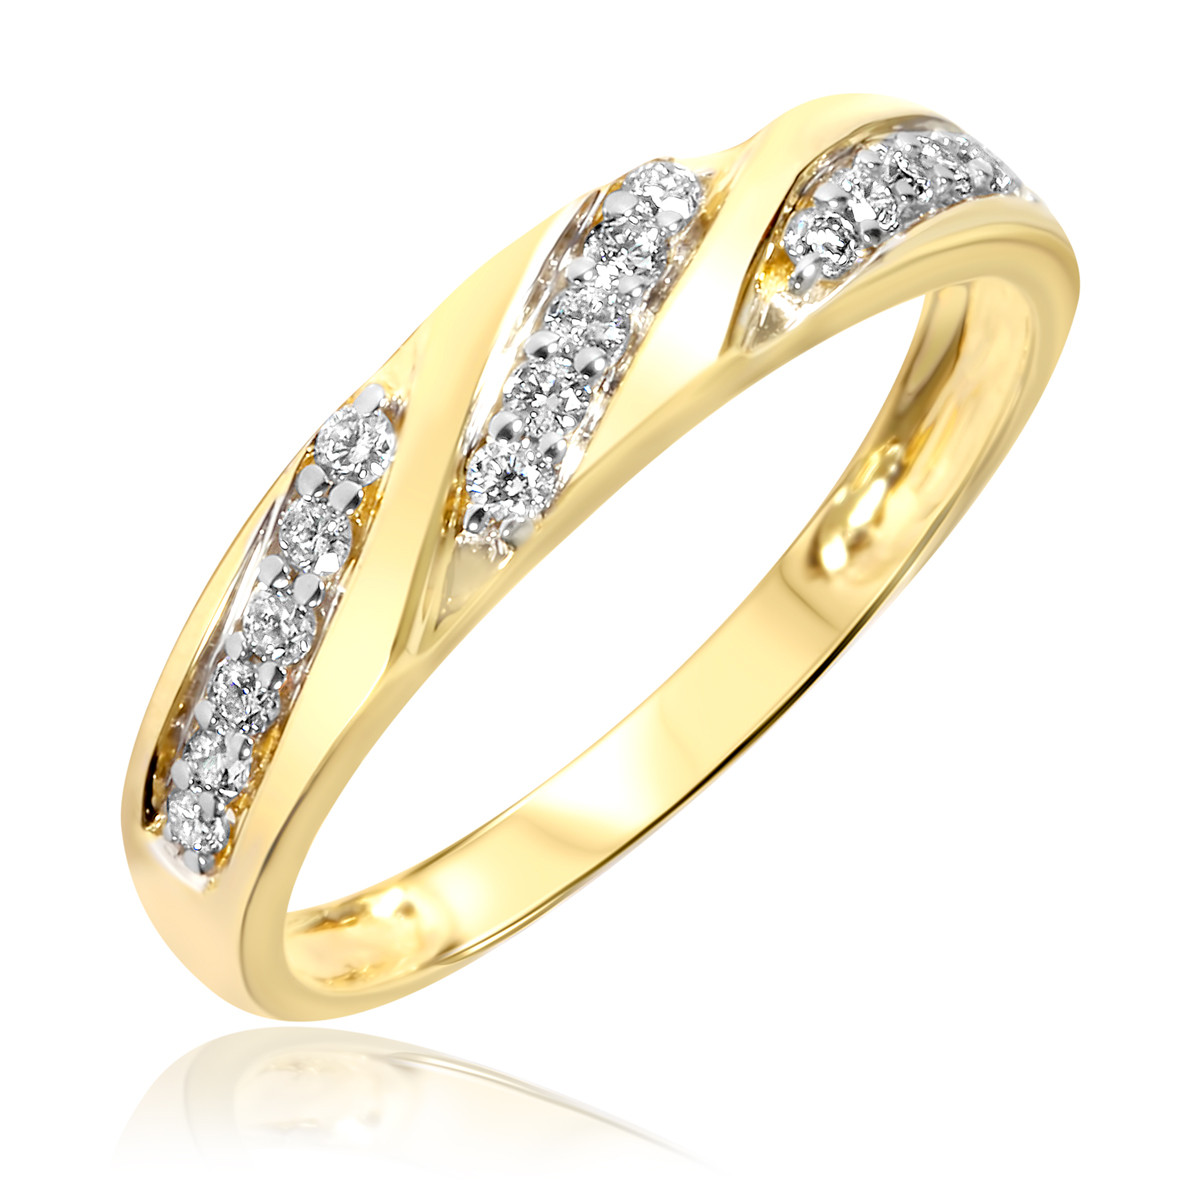 Wedding Rings Yellow Gold
 1 4 Carat T W Diamond Women s Wedding Ring 14K Yellow